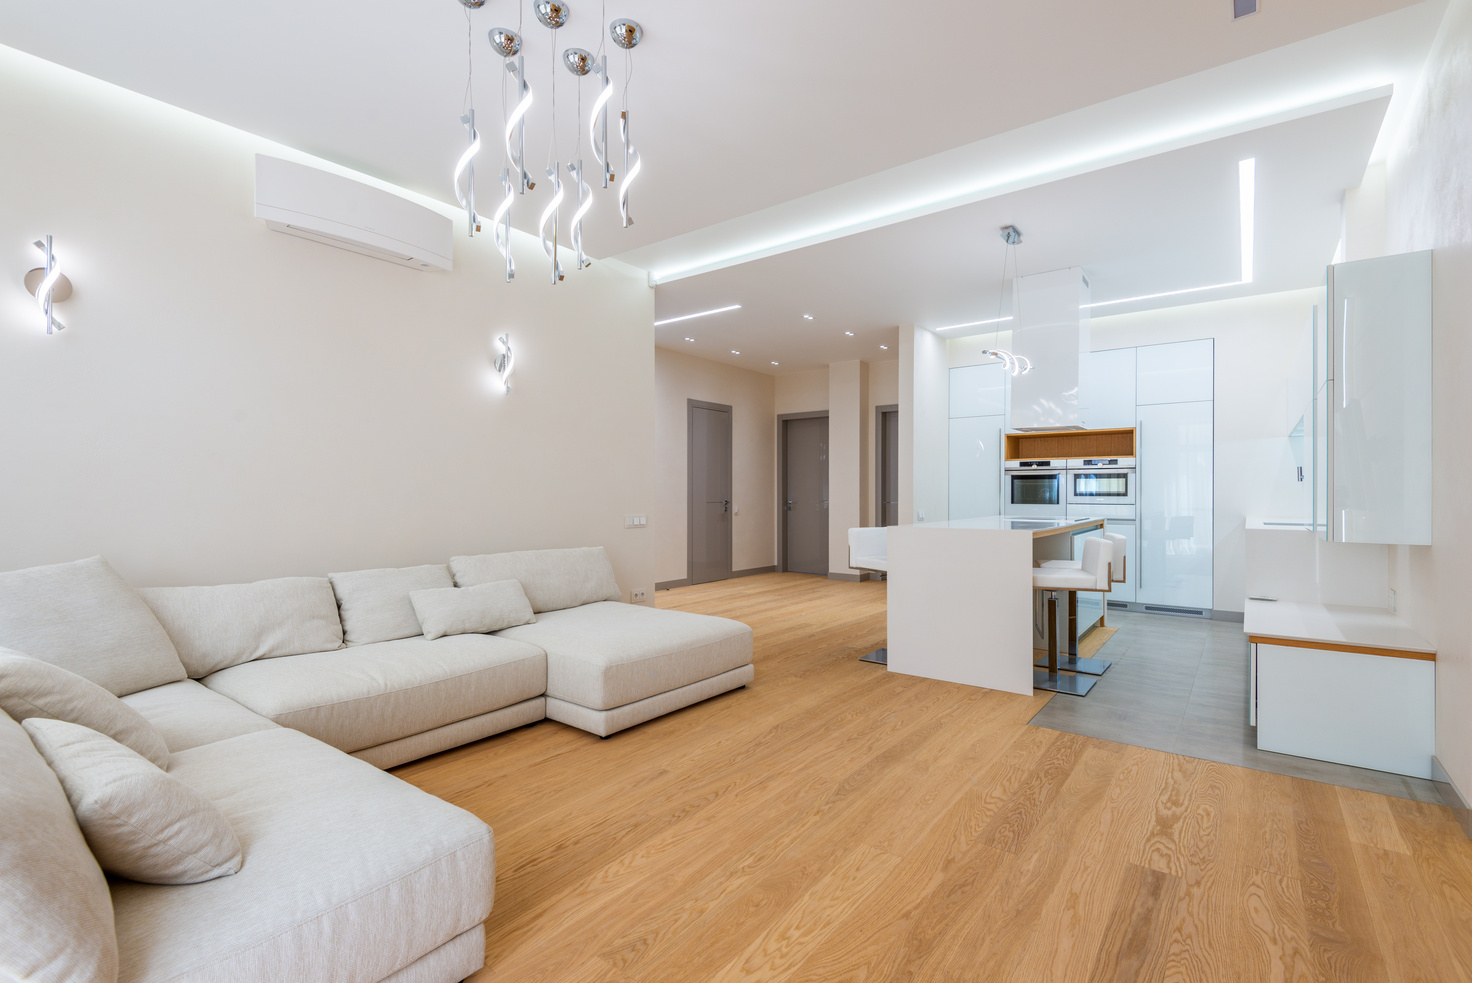 Interior of luxury apartment in minimalistic style